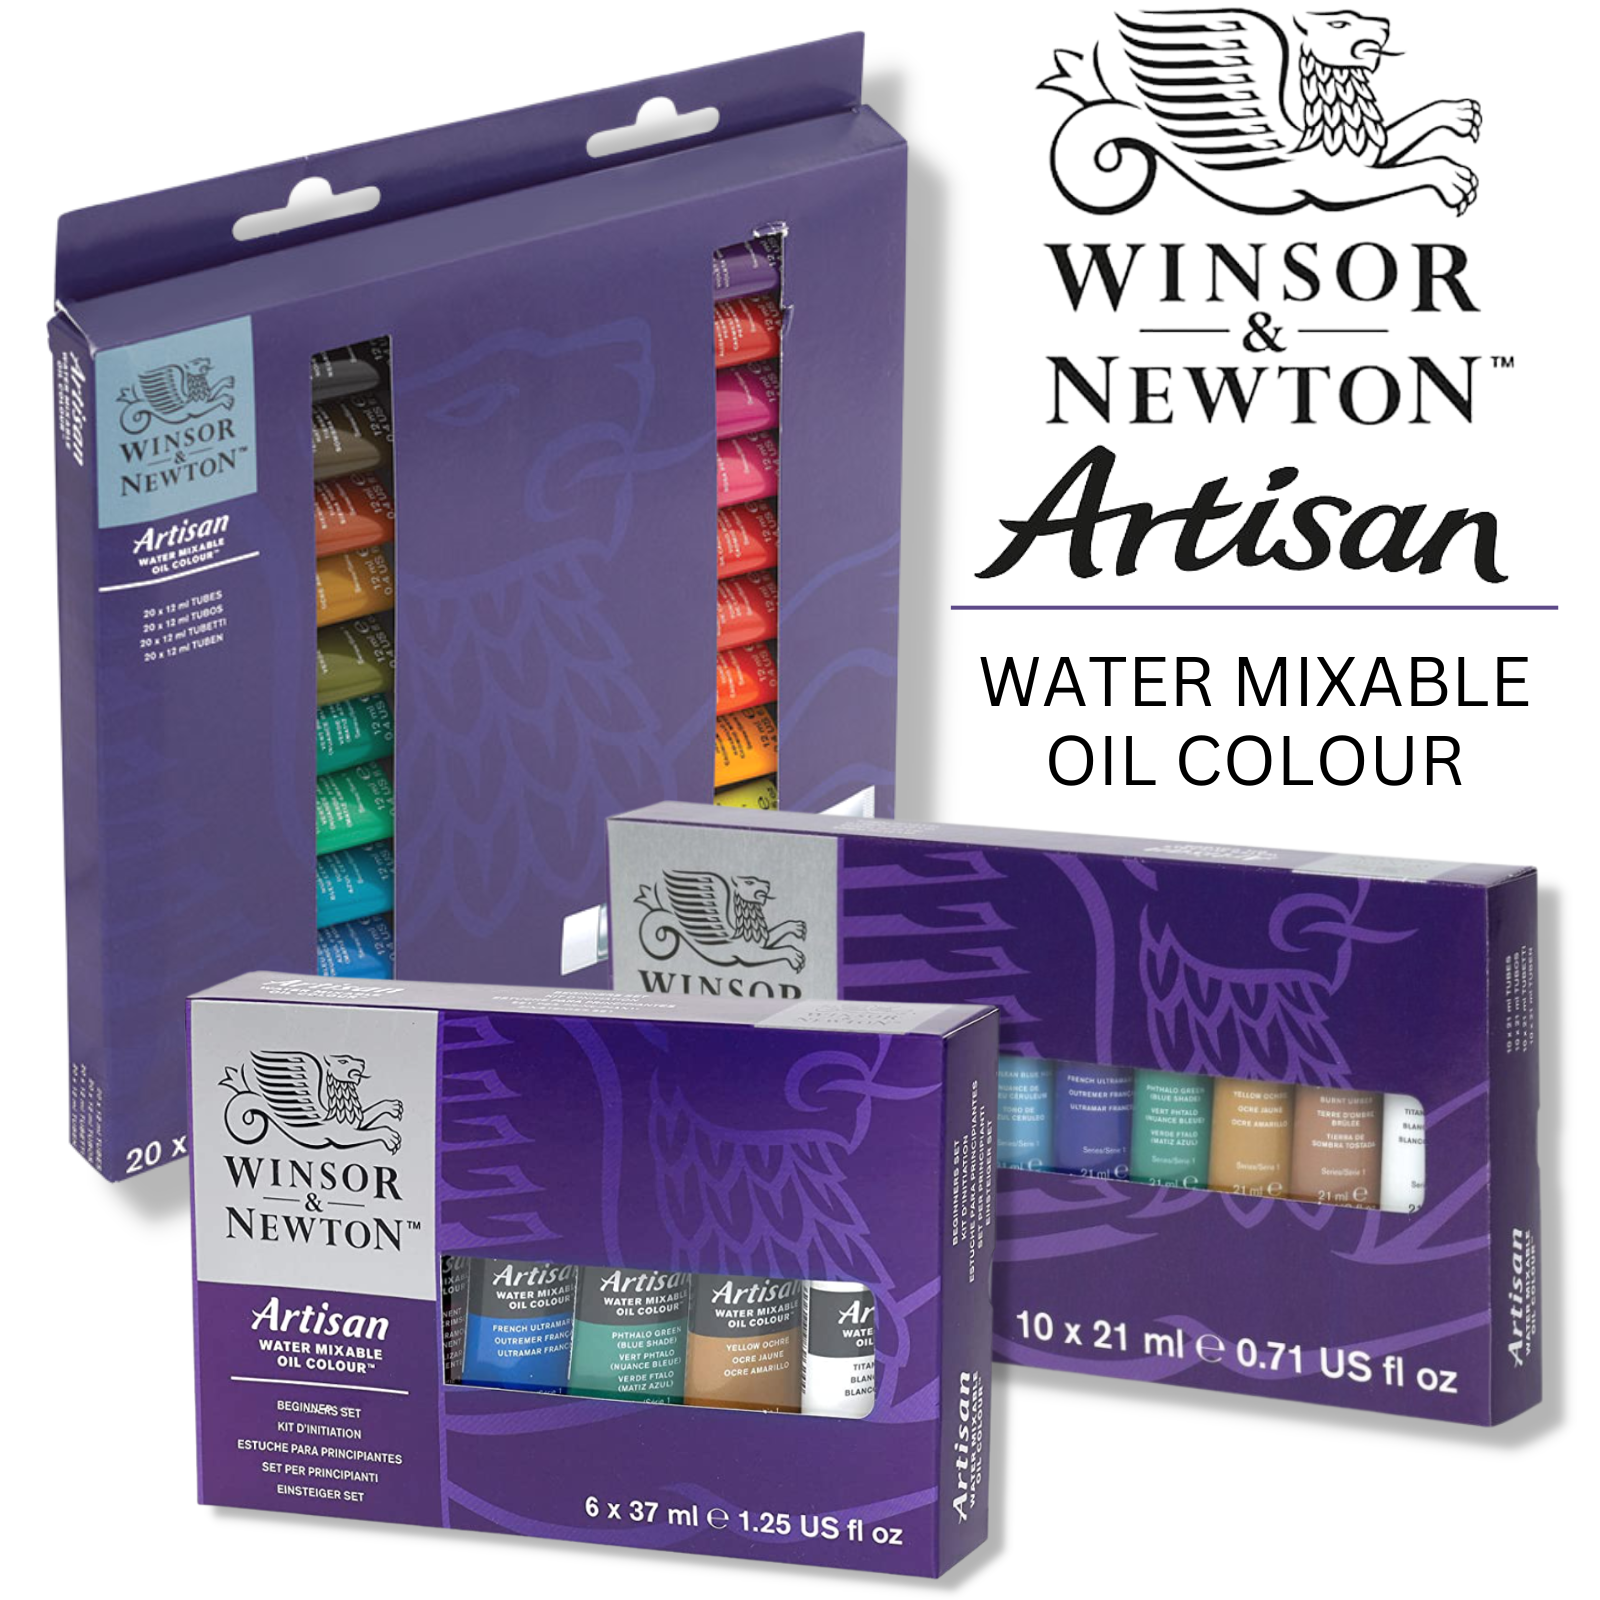 Winsor & Newton Artisan Water Mixable Oil Colour Set